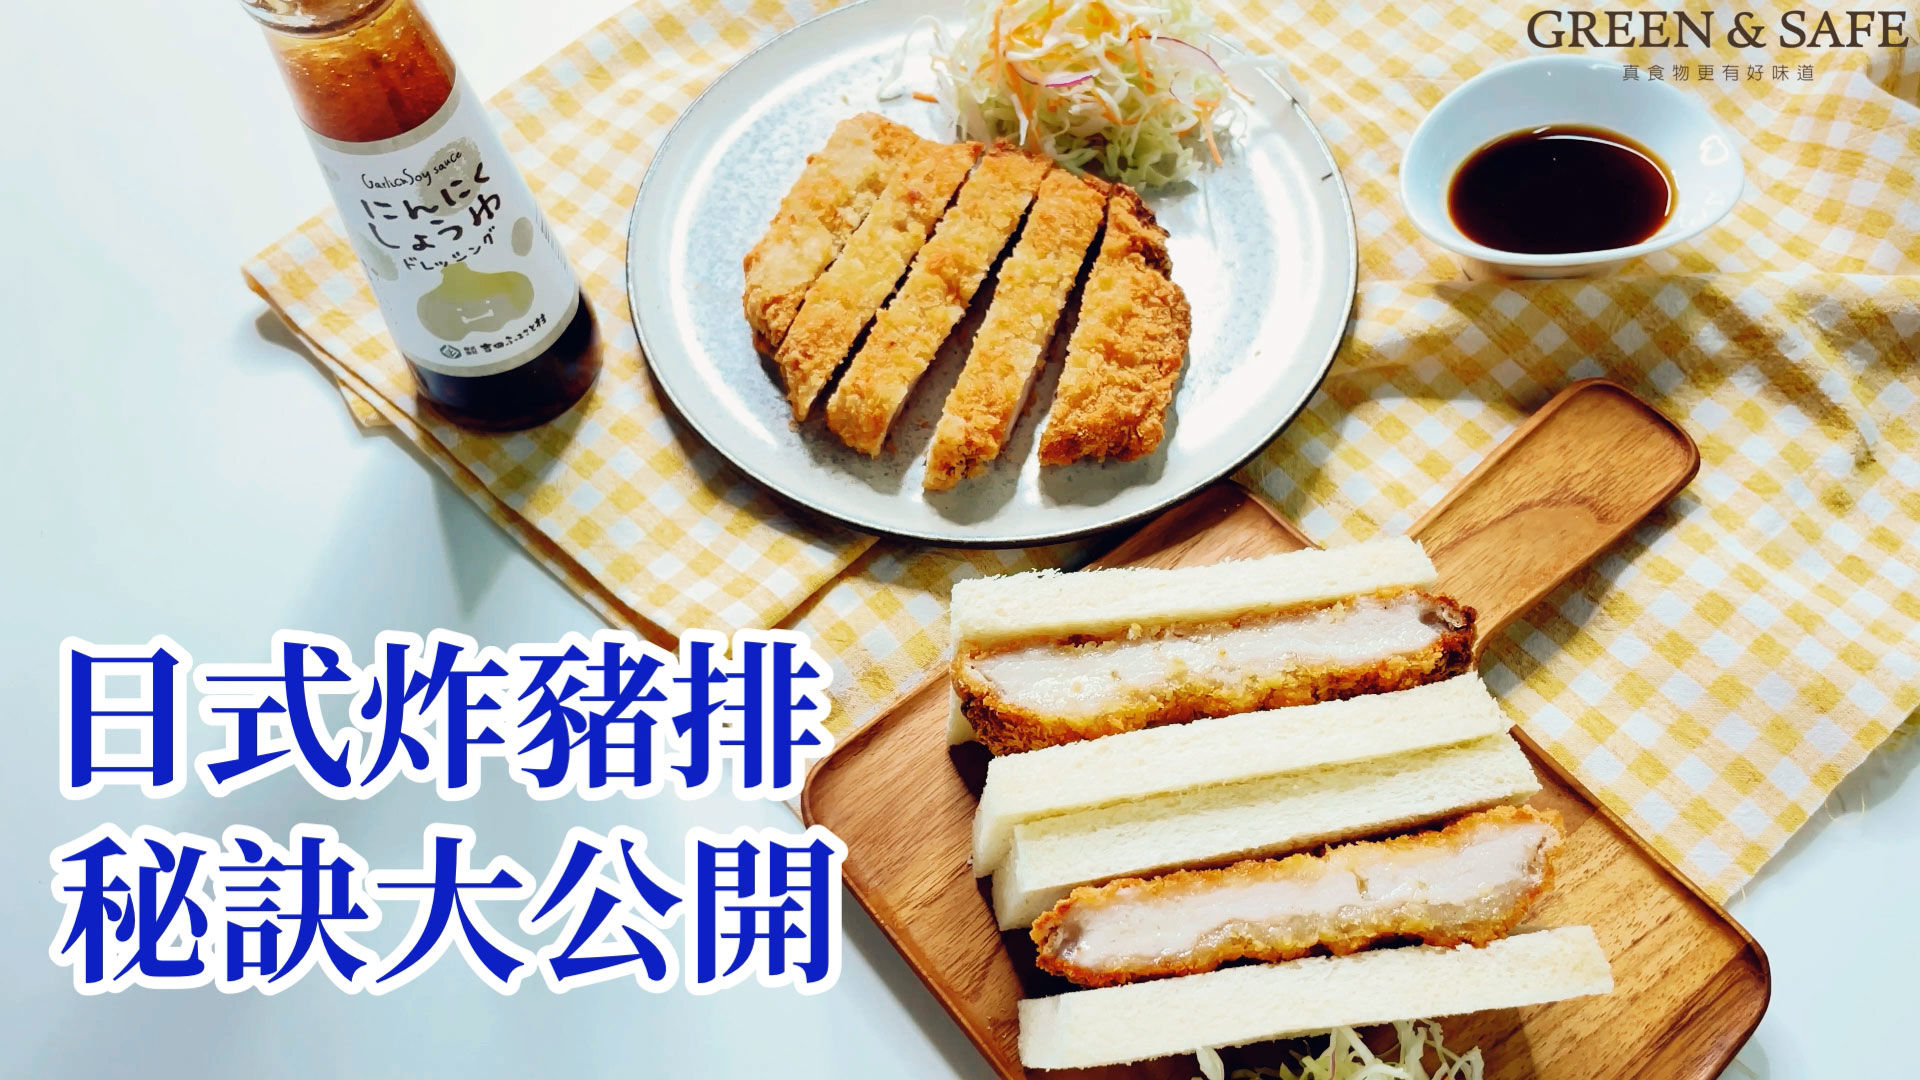 GREEN & SAFE 料理教室-日式炸豬排三明治